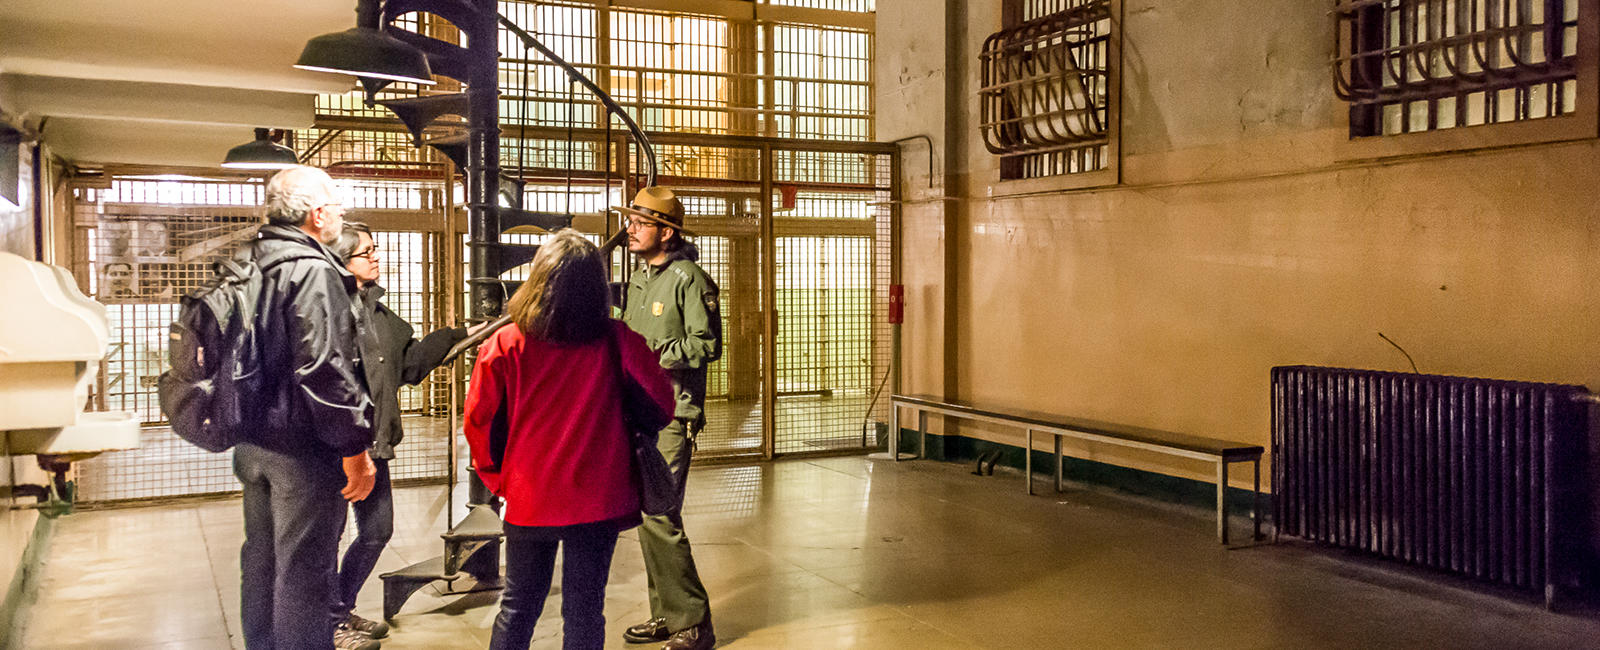 Alcatraz cell block visitors